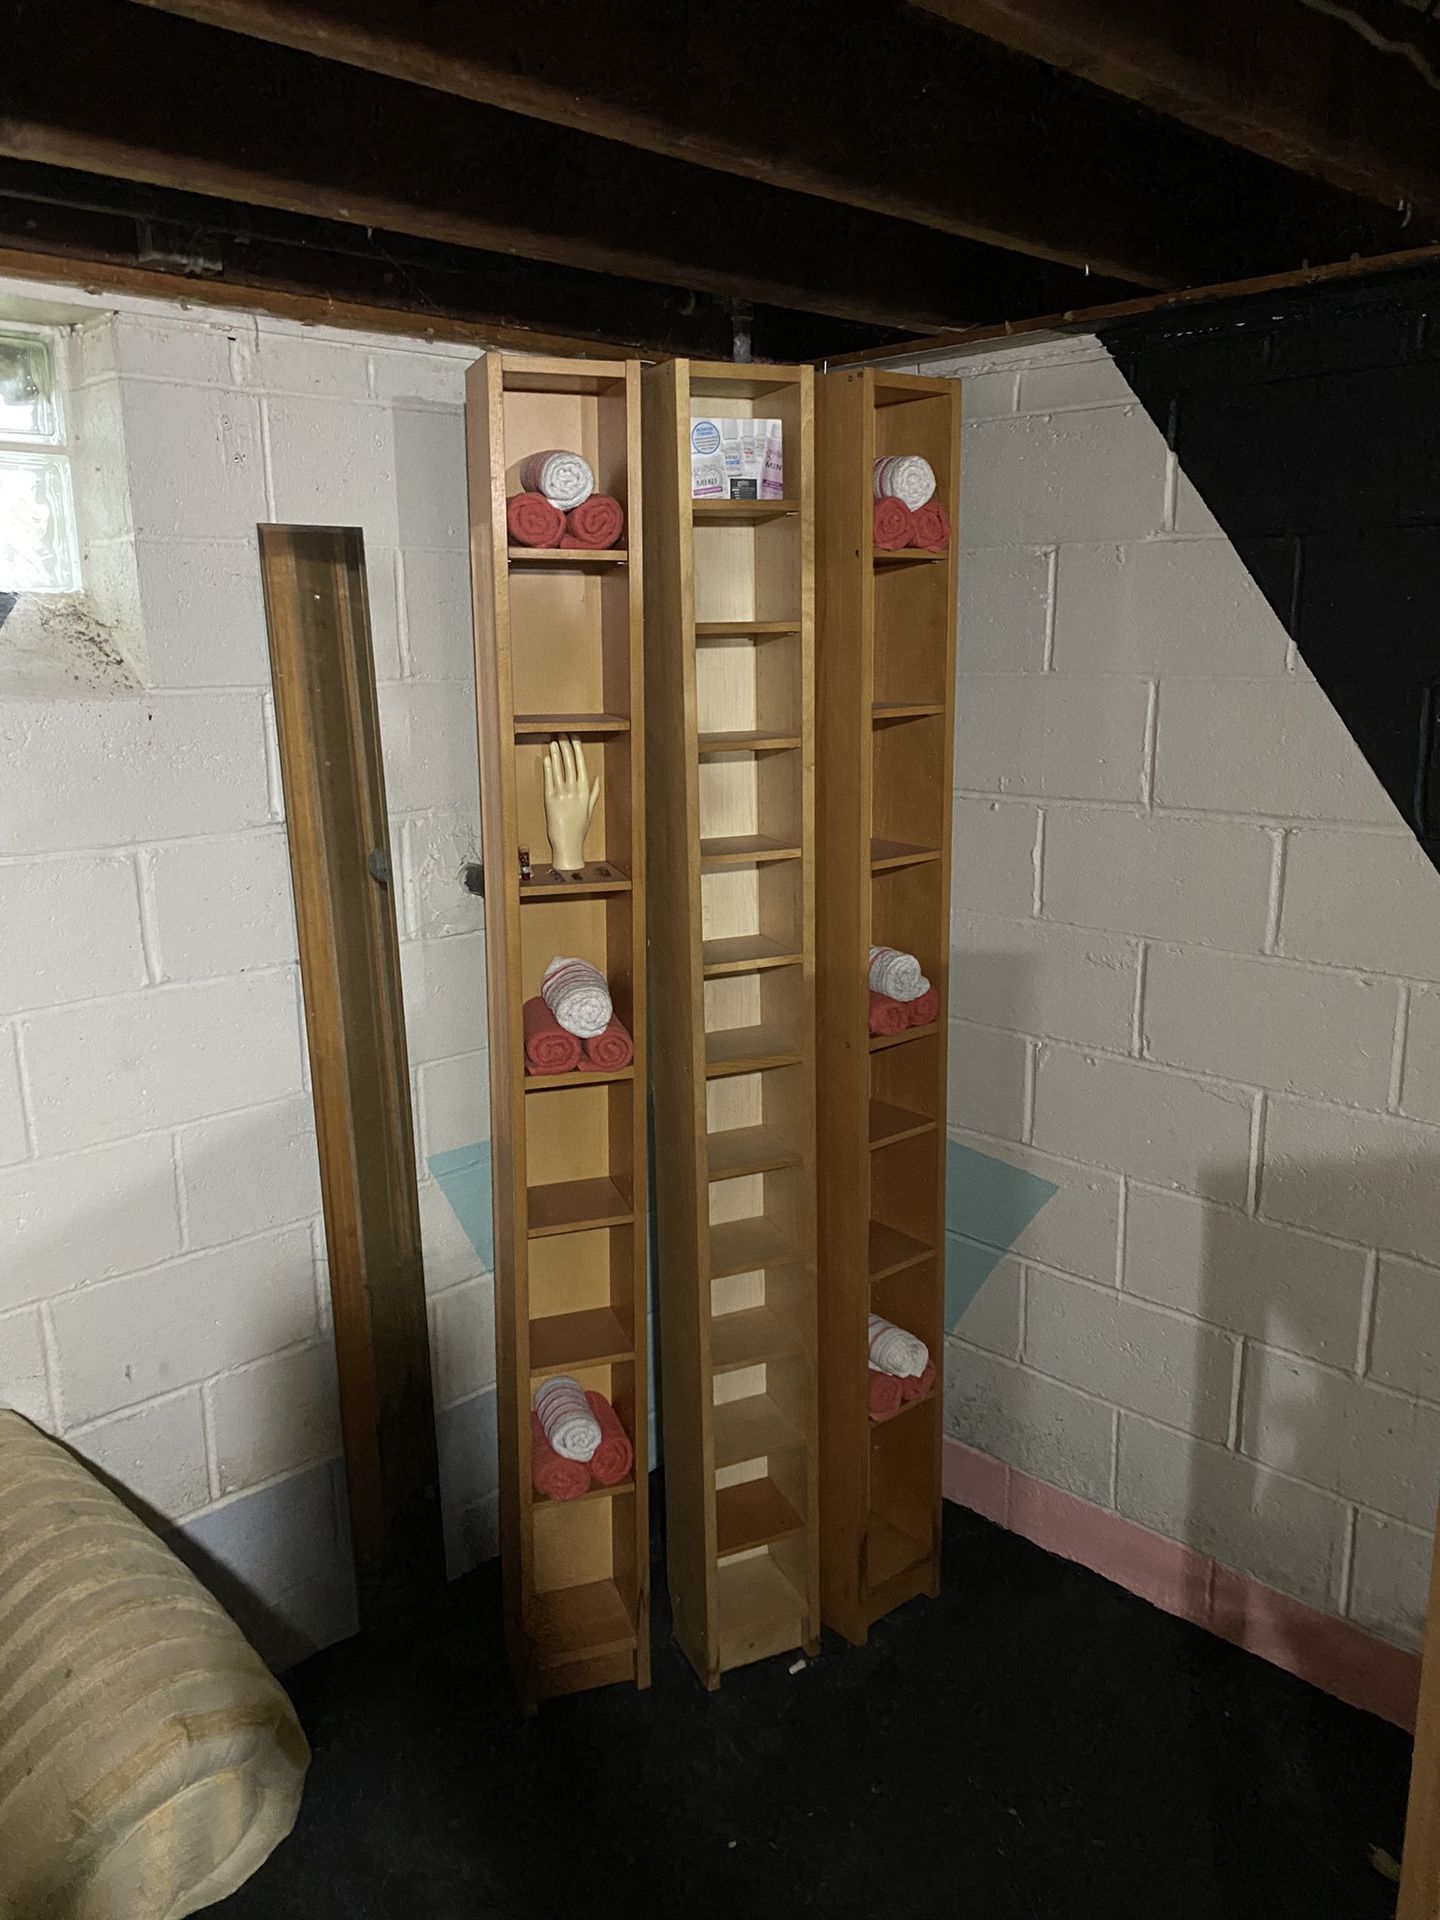 Storage Shelves 